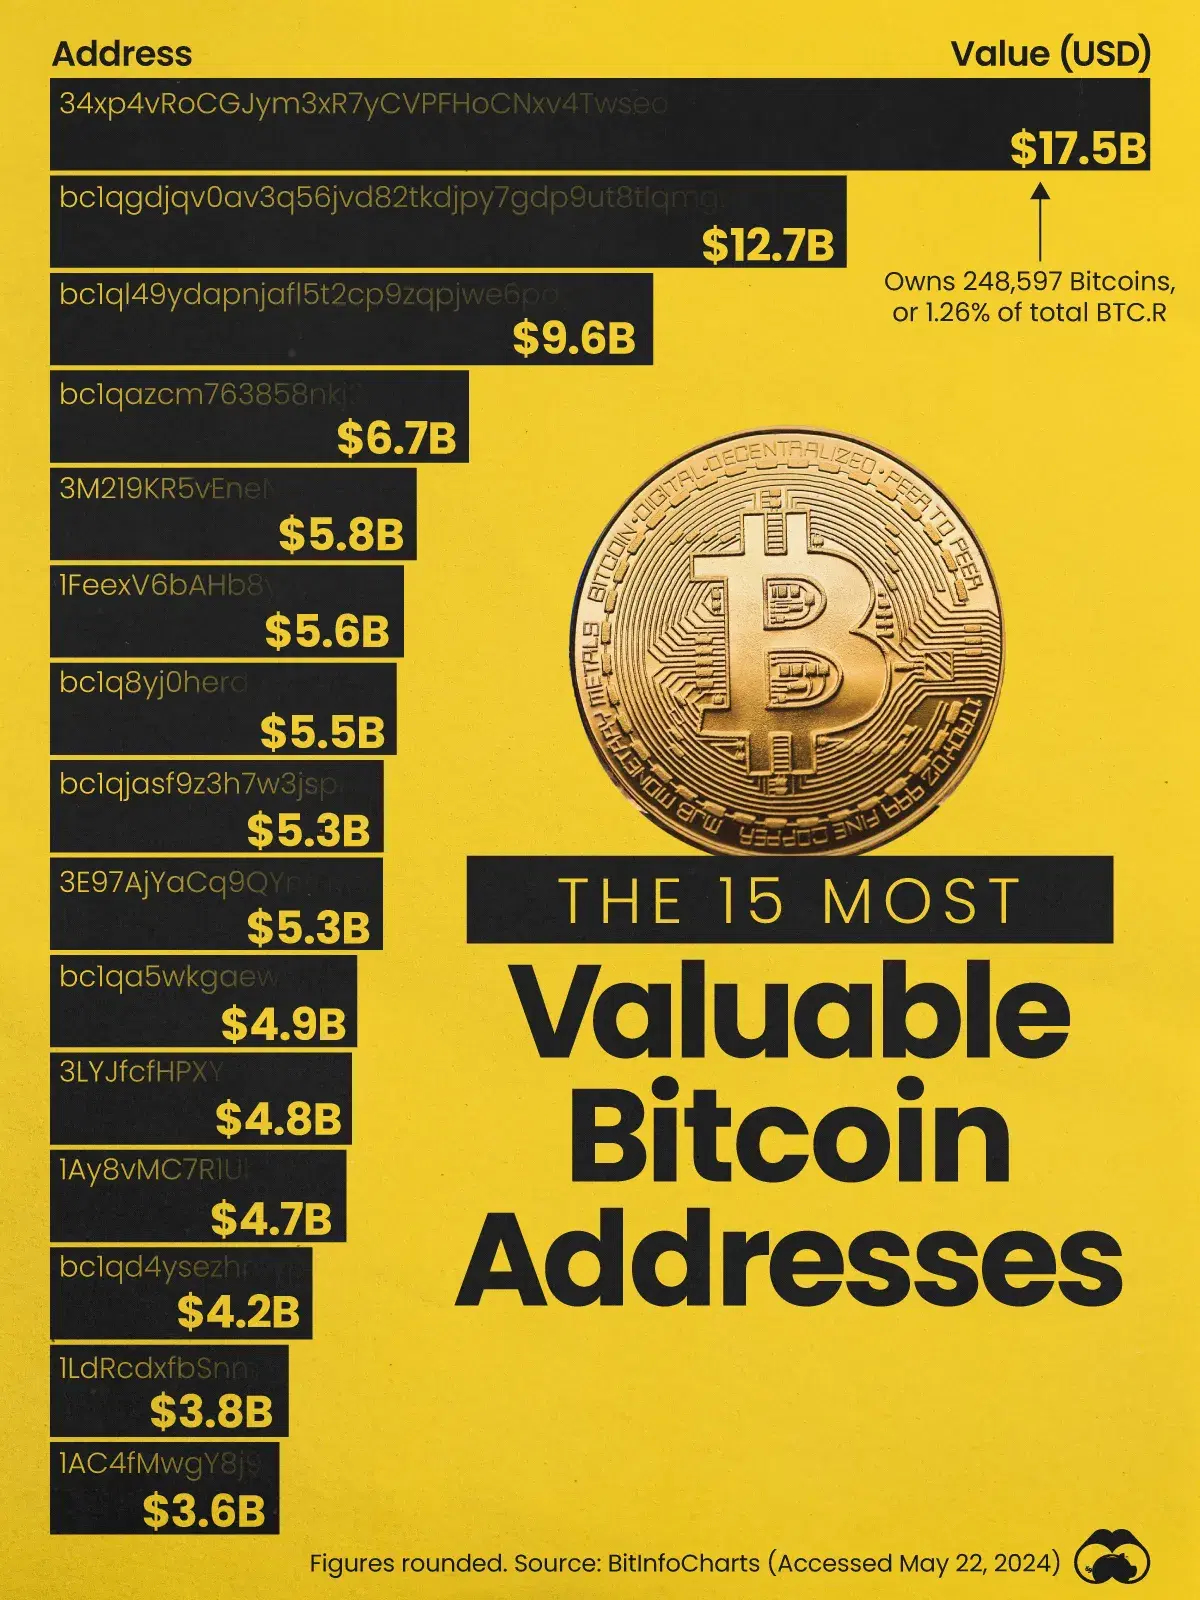 The World’s Largest Bitcoin Address is Worth $17.5 Billion